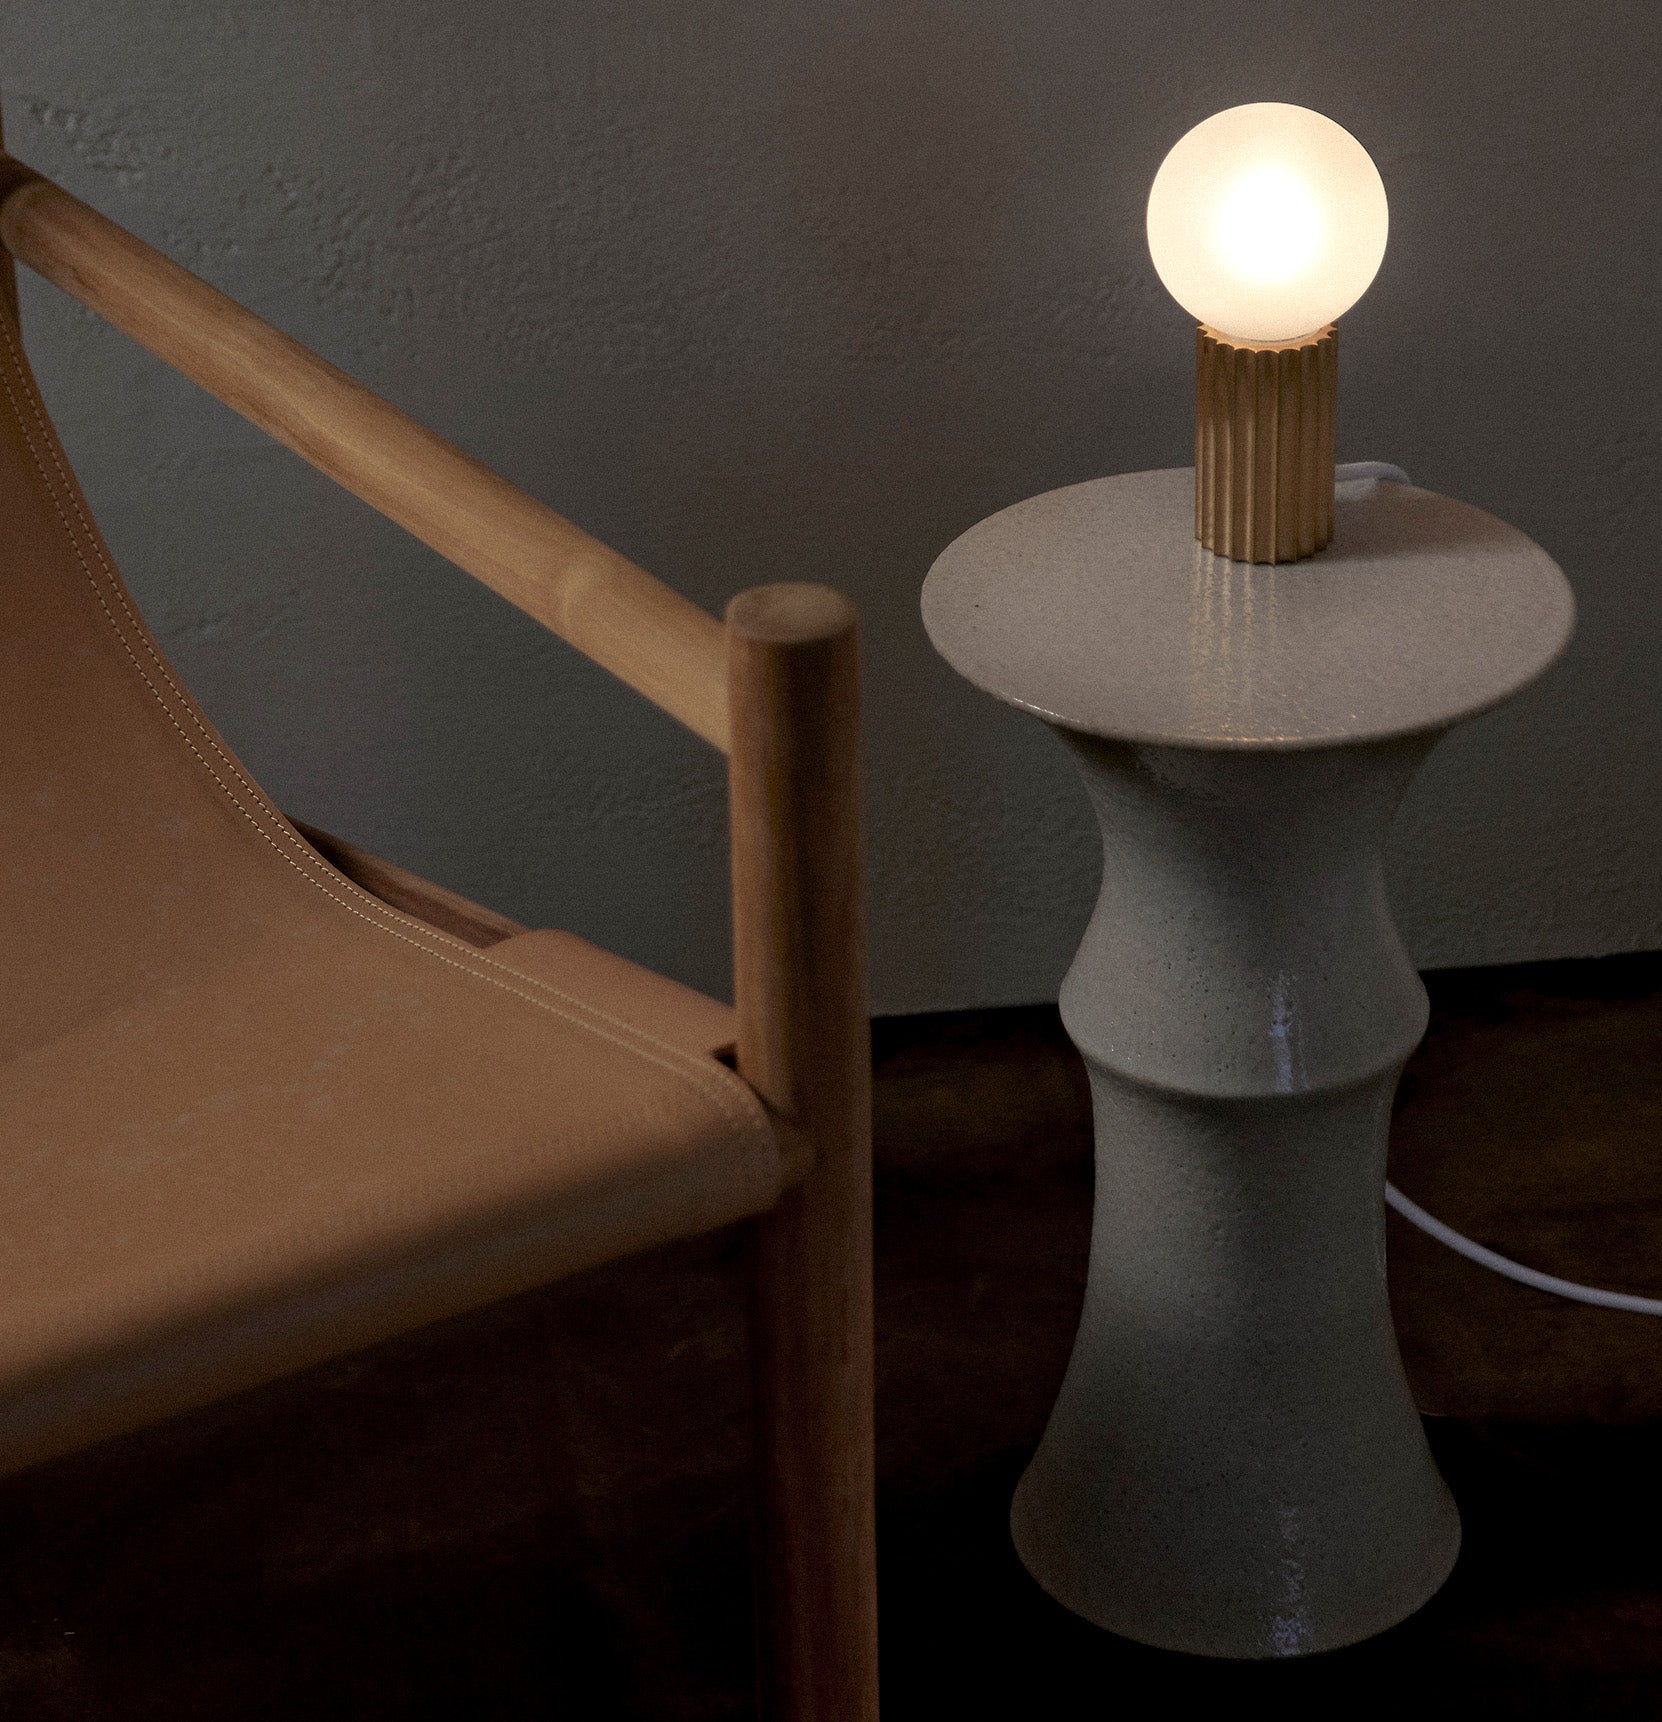 Marz Designs Attalos Table Lamp 95 on a ceramic plinth.